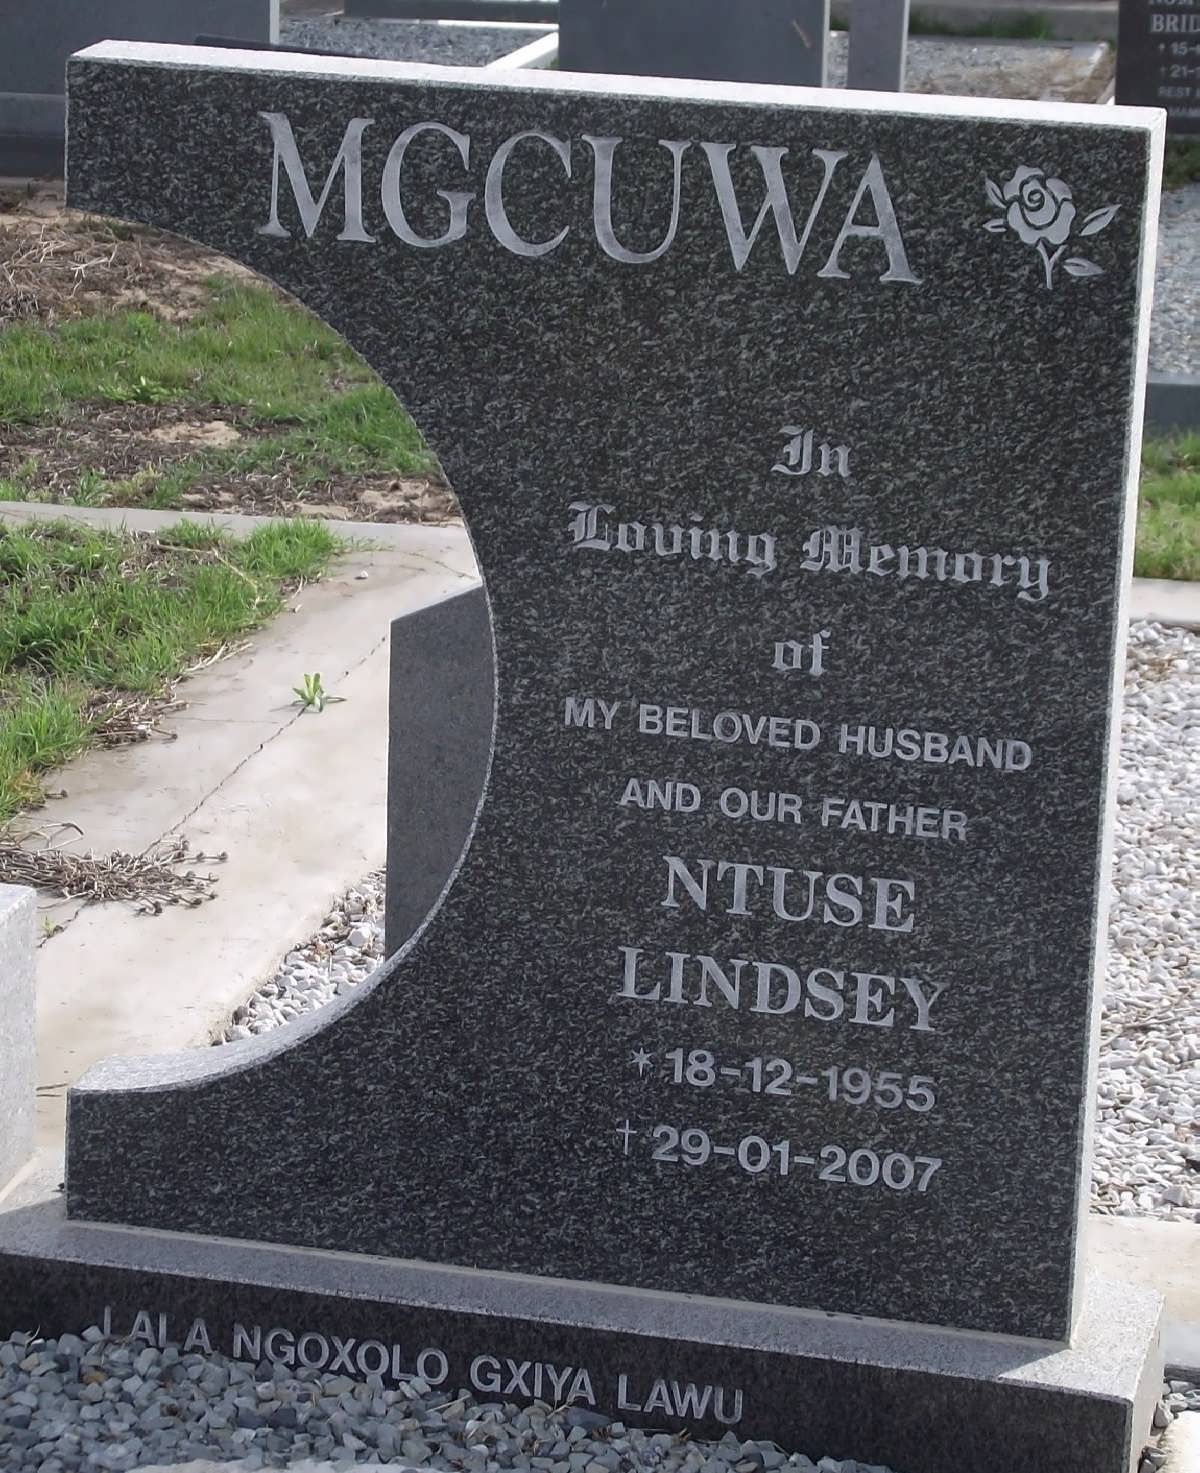 MGCUWA Ntuse Lindsey 1955-2007